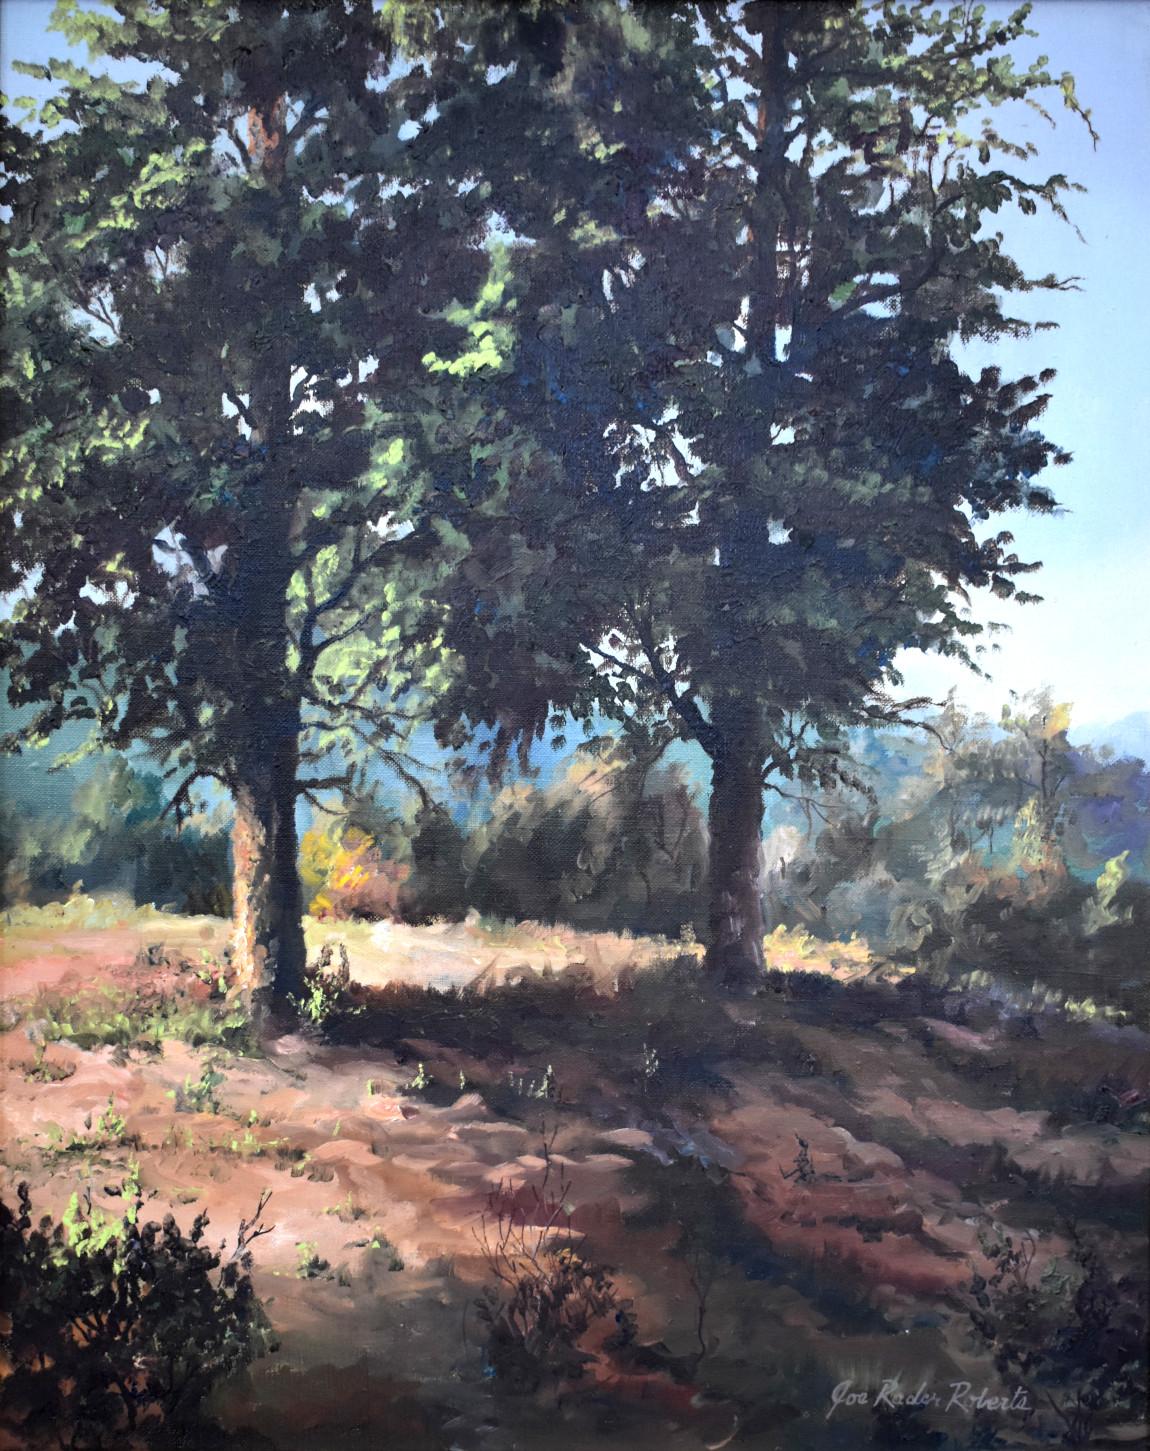 Joe Raider Roberts Landscape Painting - "BAKERS FARM" LUFKIN TEXAS HILL COUNTRY LANDSCAPE